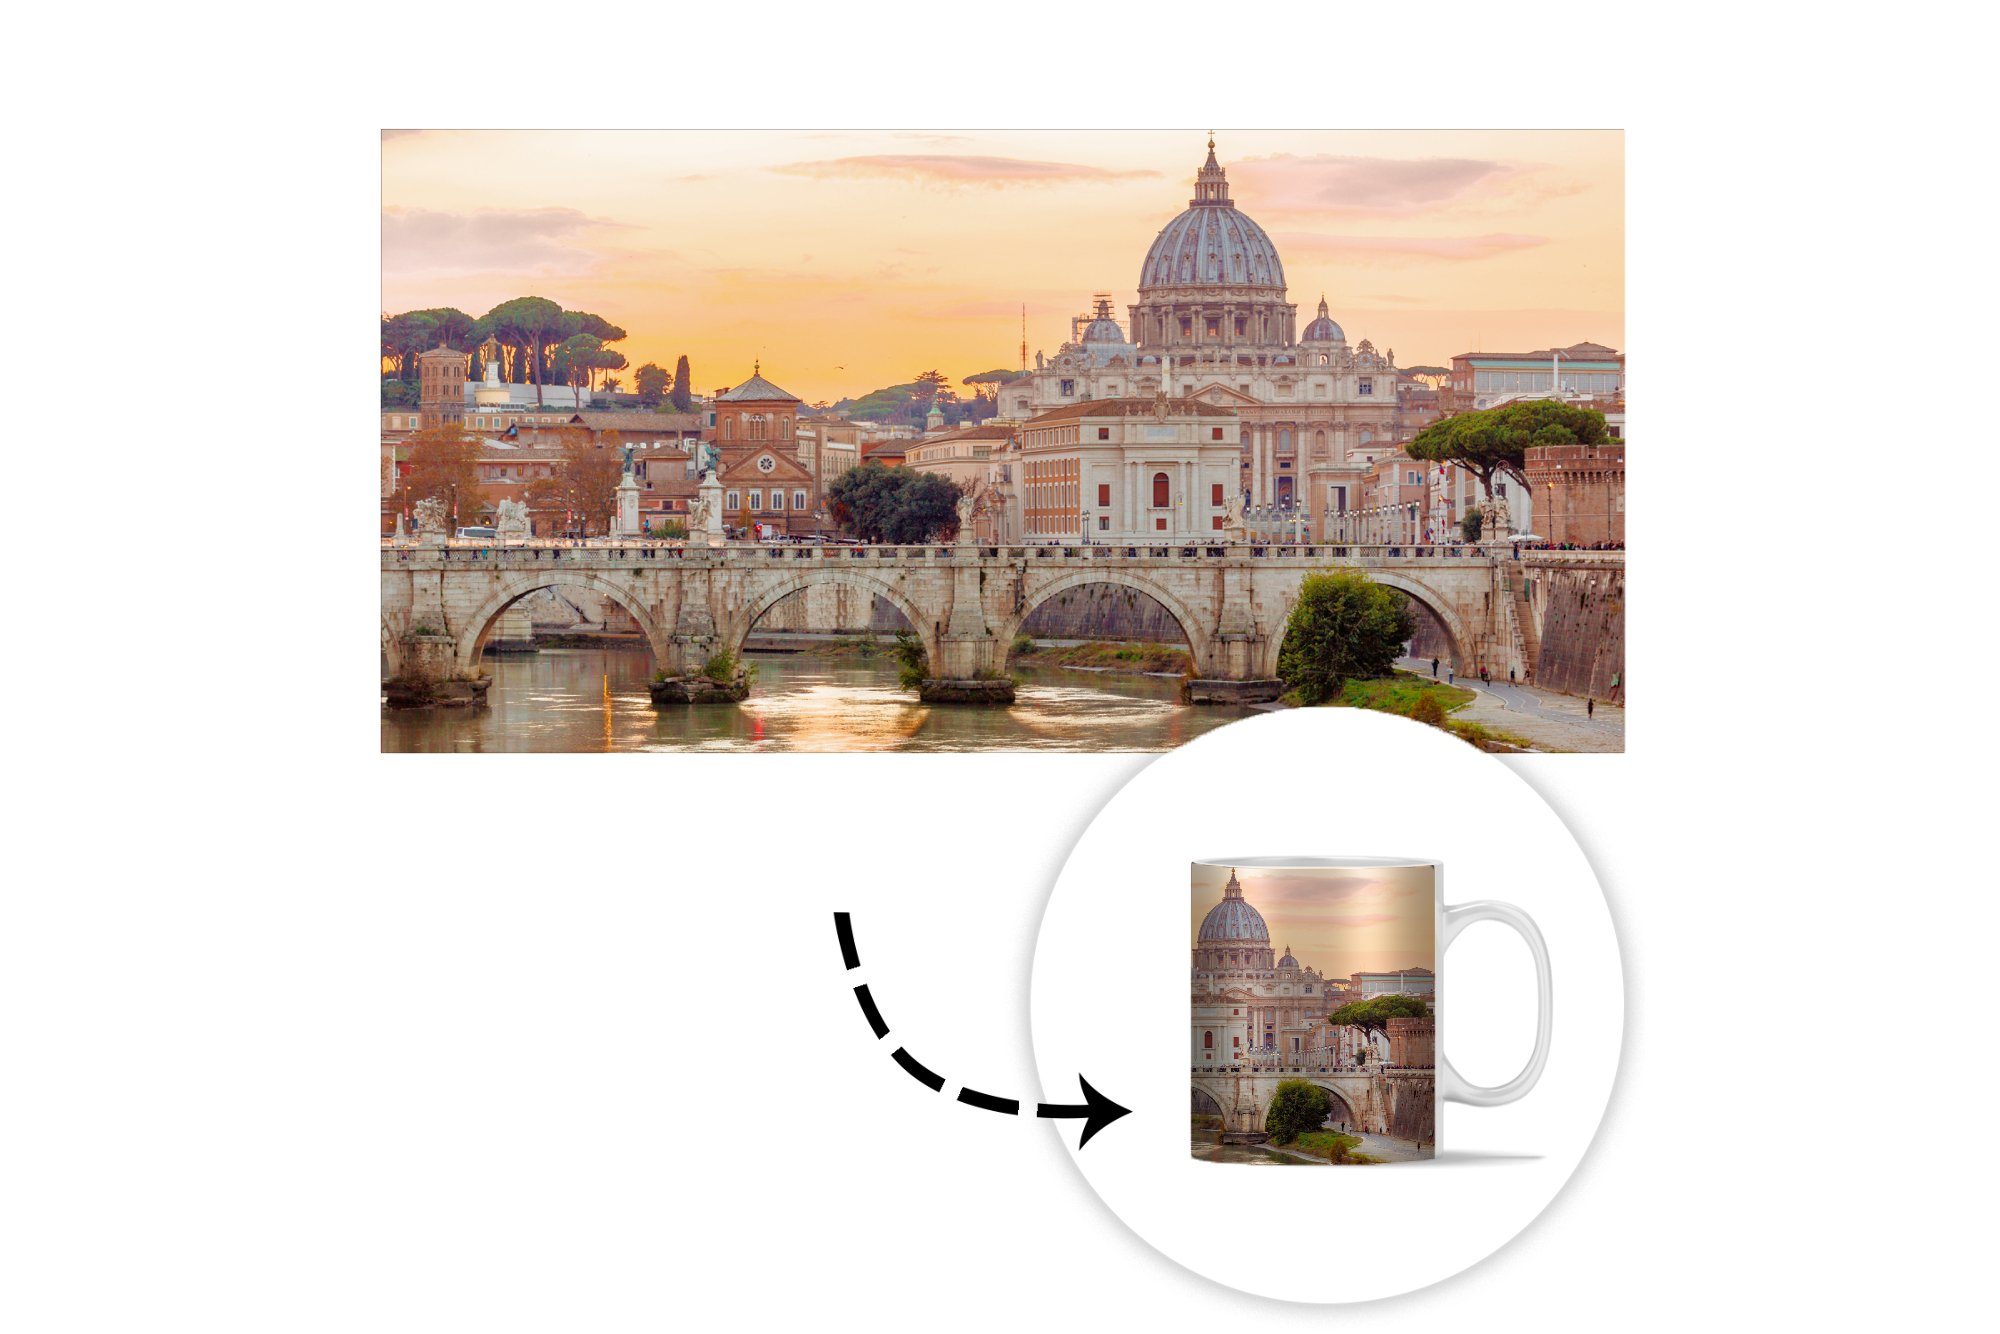 MuchoWow Tasse Italien Keramik, Skyline Teetasse, Becher, Rom, Geschenk Teetasse, Kaffeetassen, - 